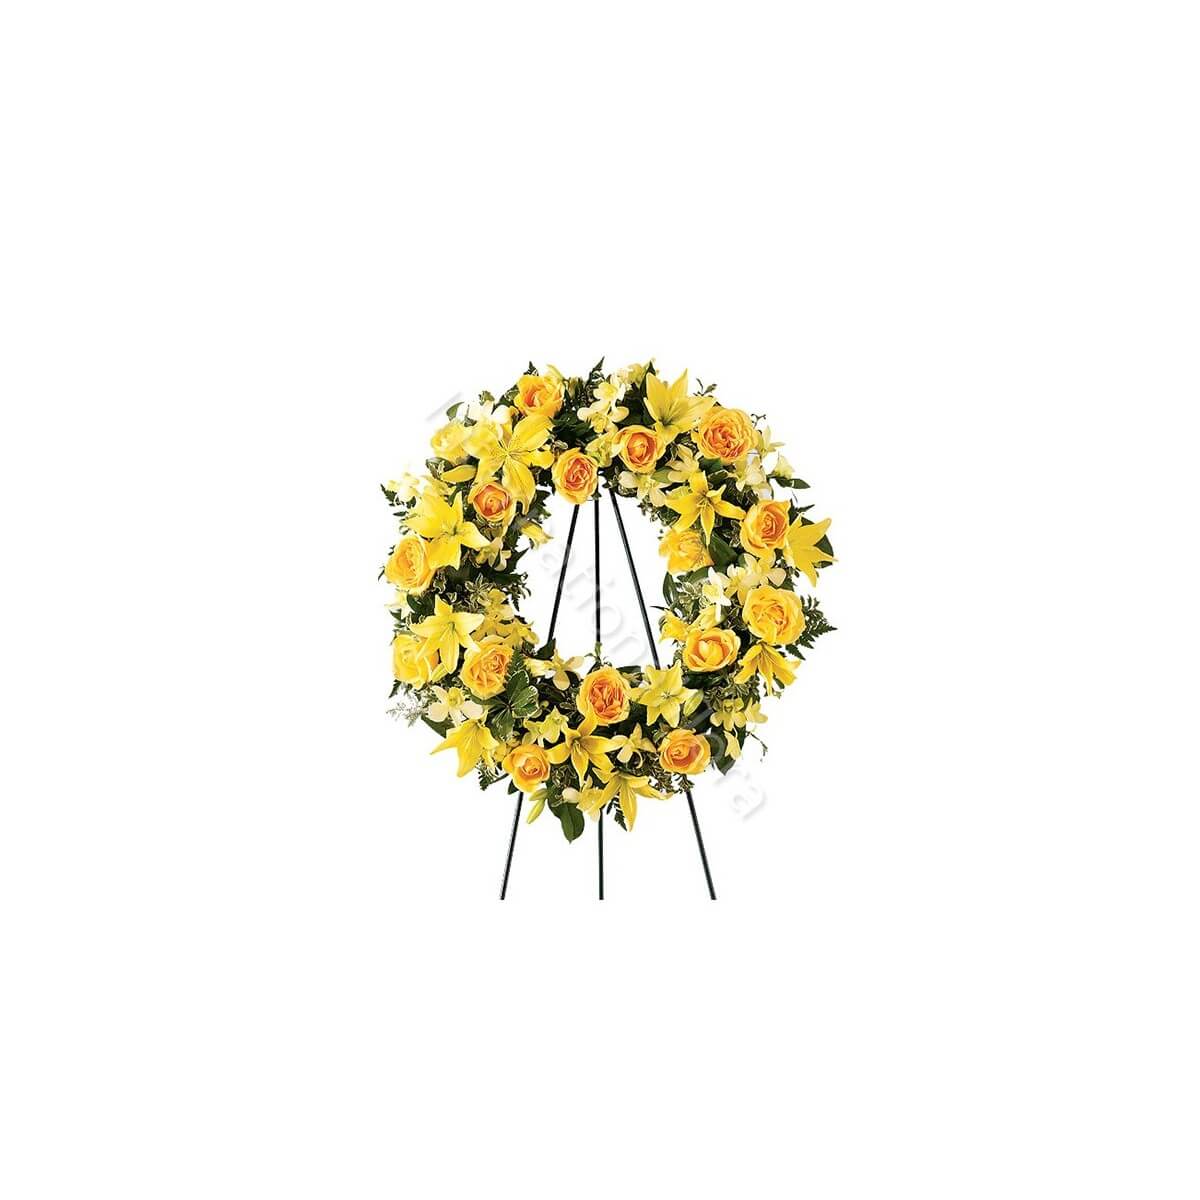 Corona funebre di Fiori gialli